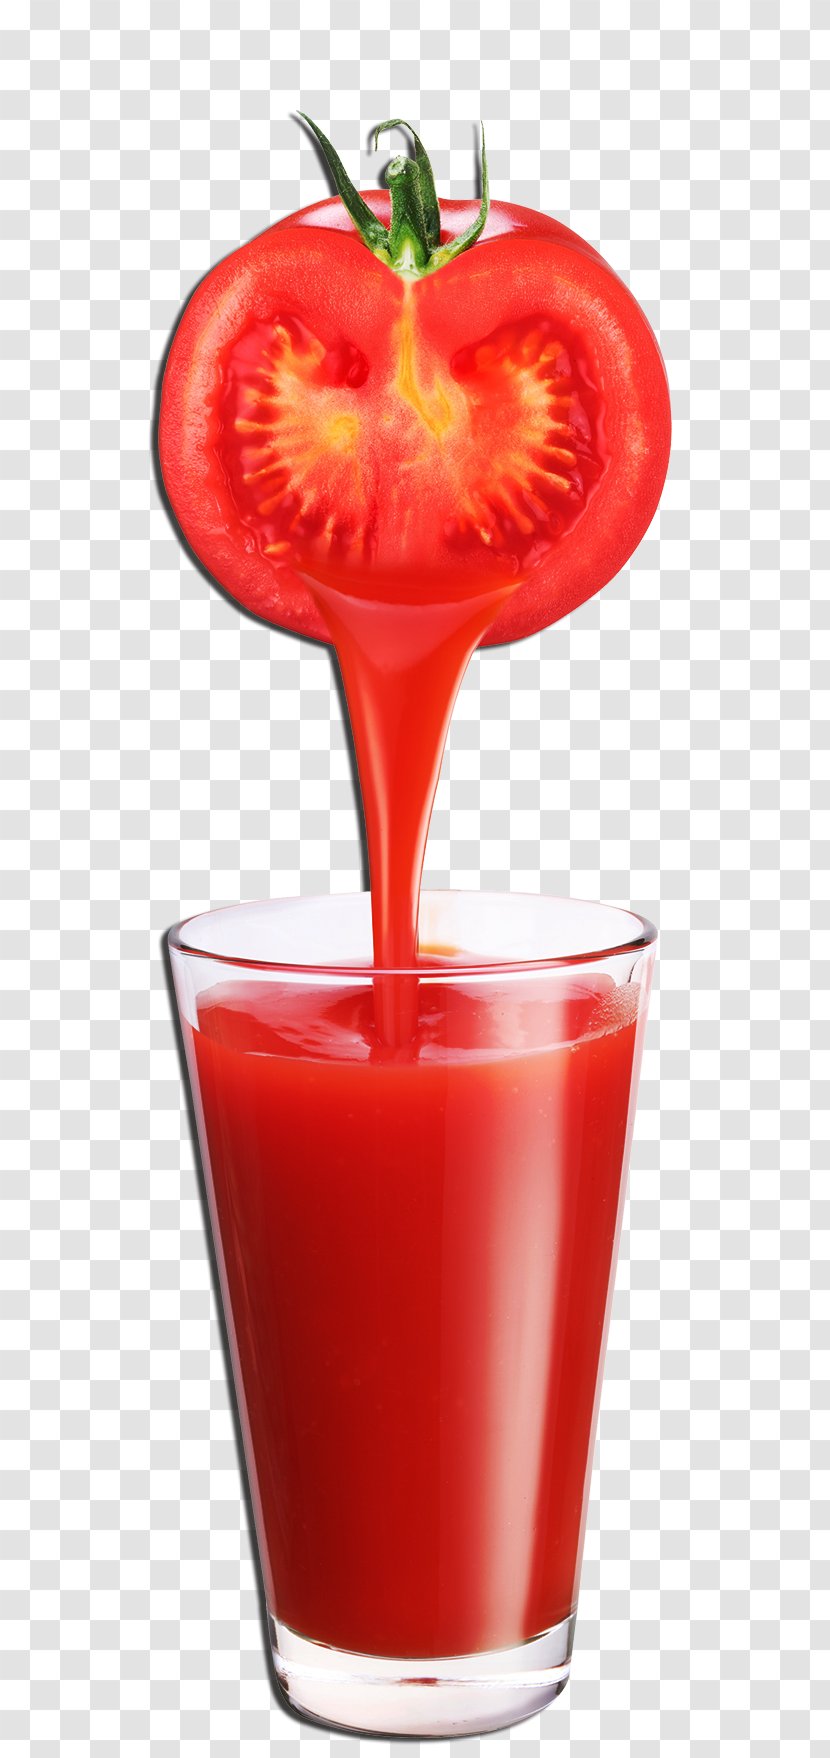 Orange Juice Smoothie Cancer Juicing - Tomato Transparent PNG